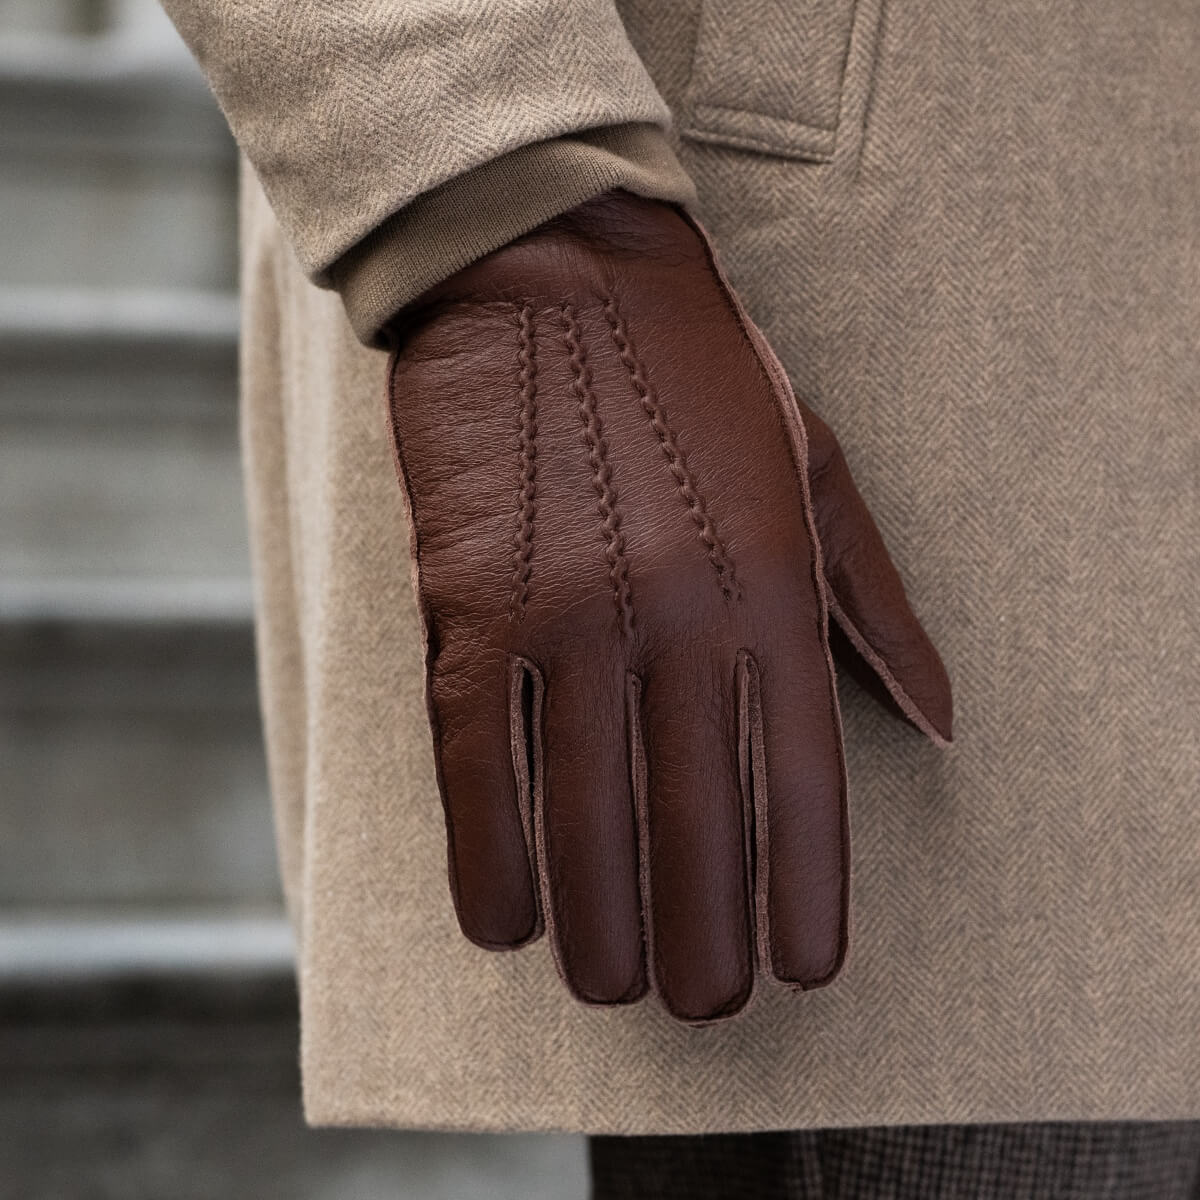 deerskin leather gloves